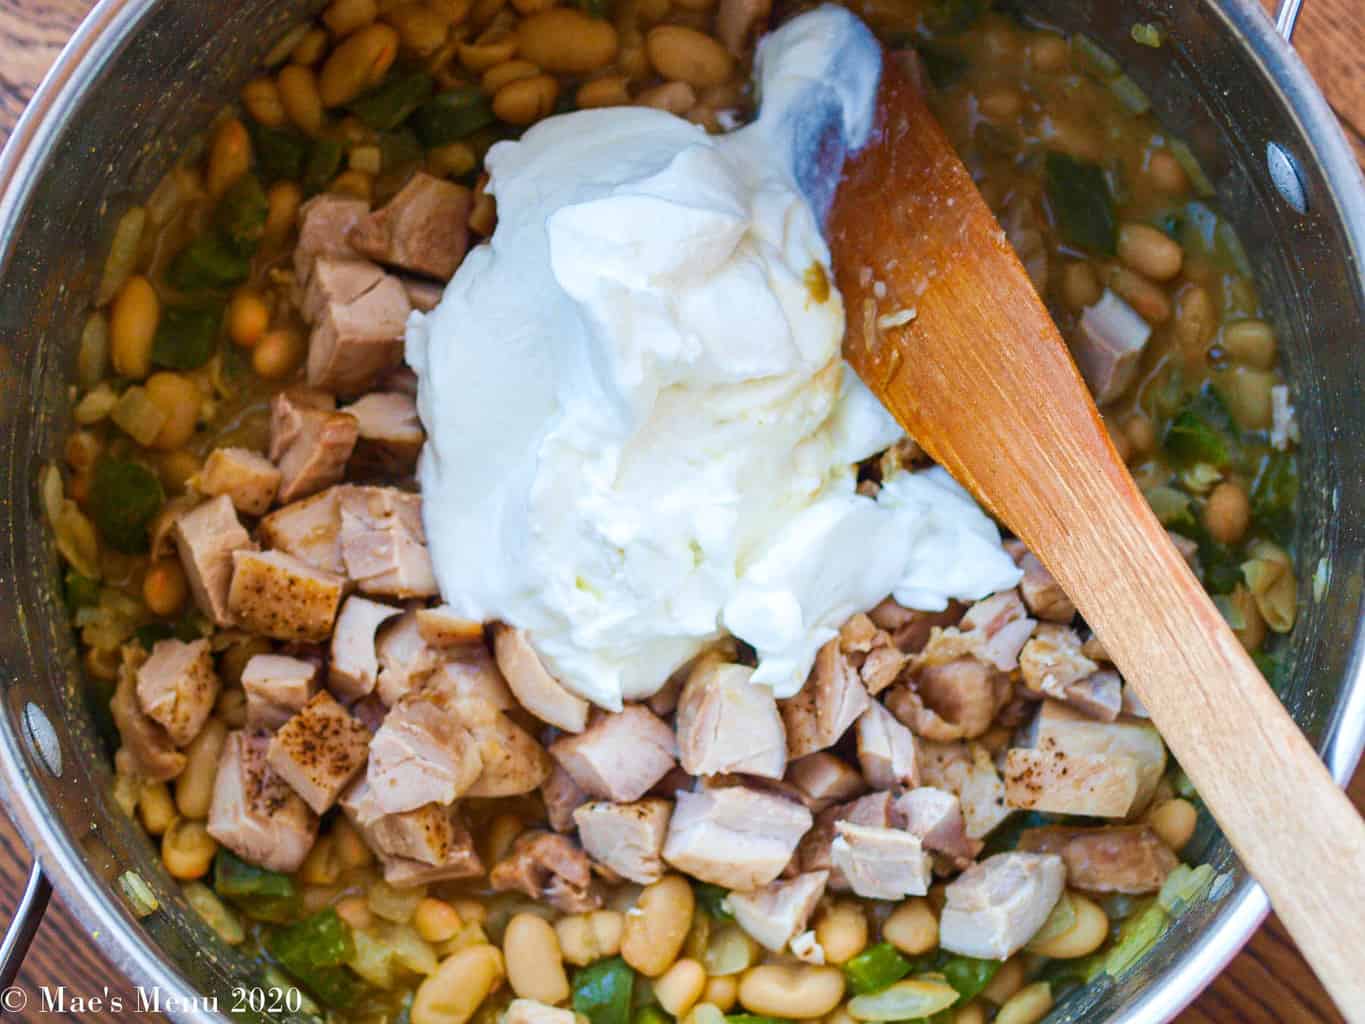 Beans, veggies, turkey, and greek yogurt in a pot